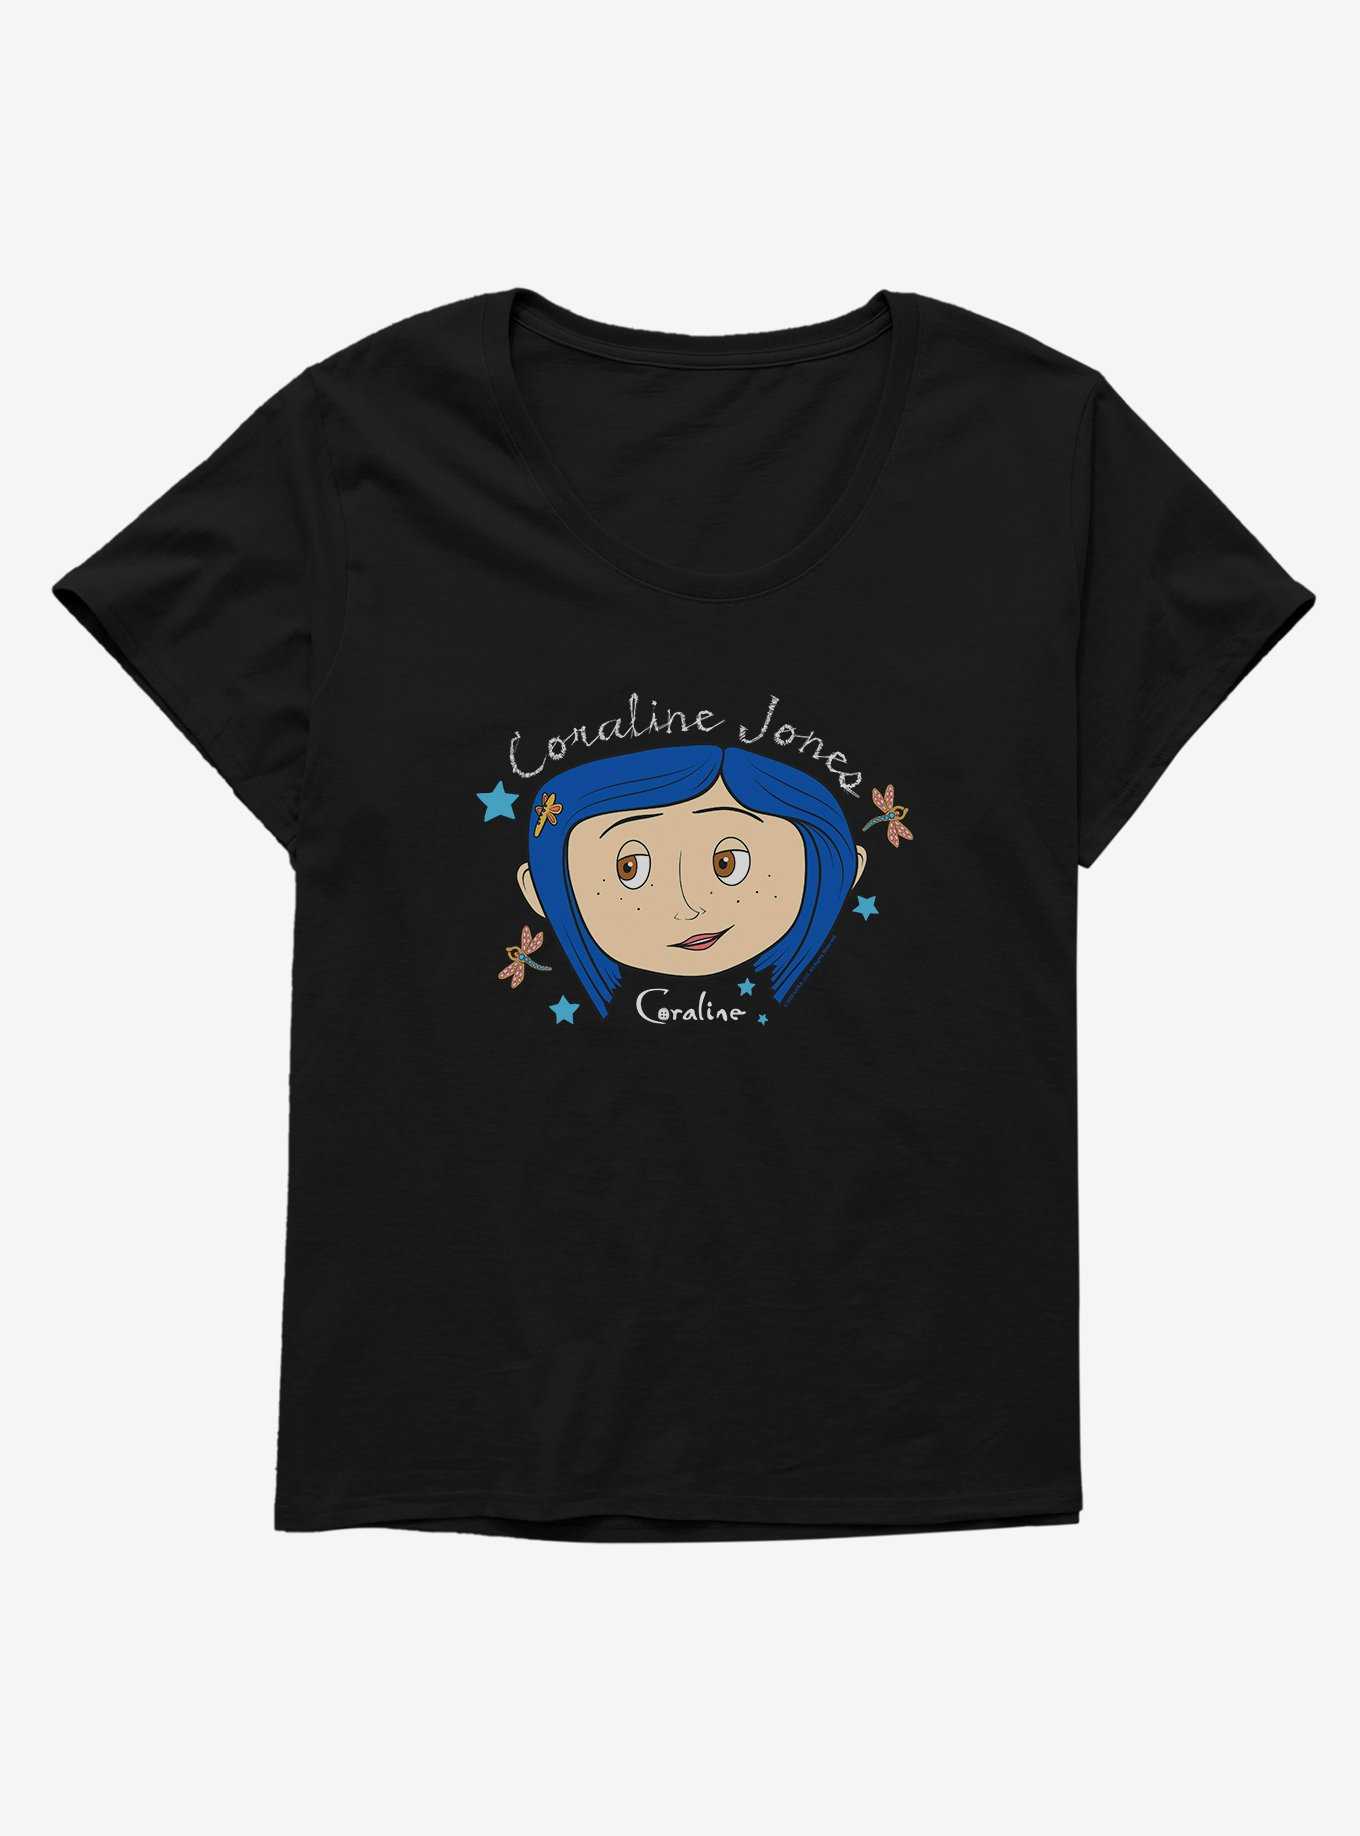 Coraline Coraline Jones Girls T-Shirt Plus Size, , hi-res